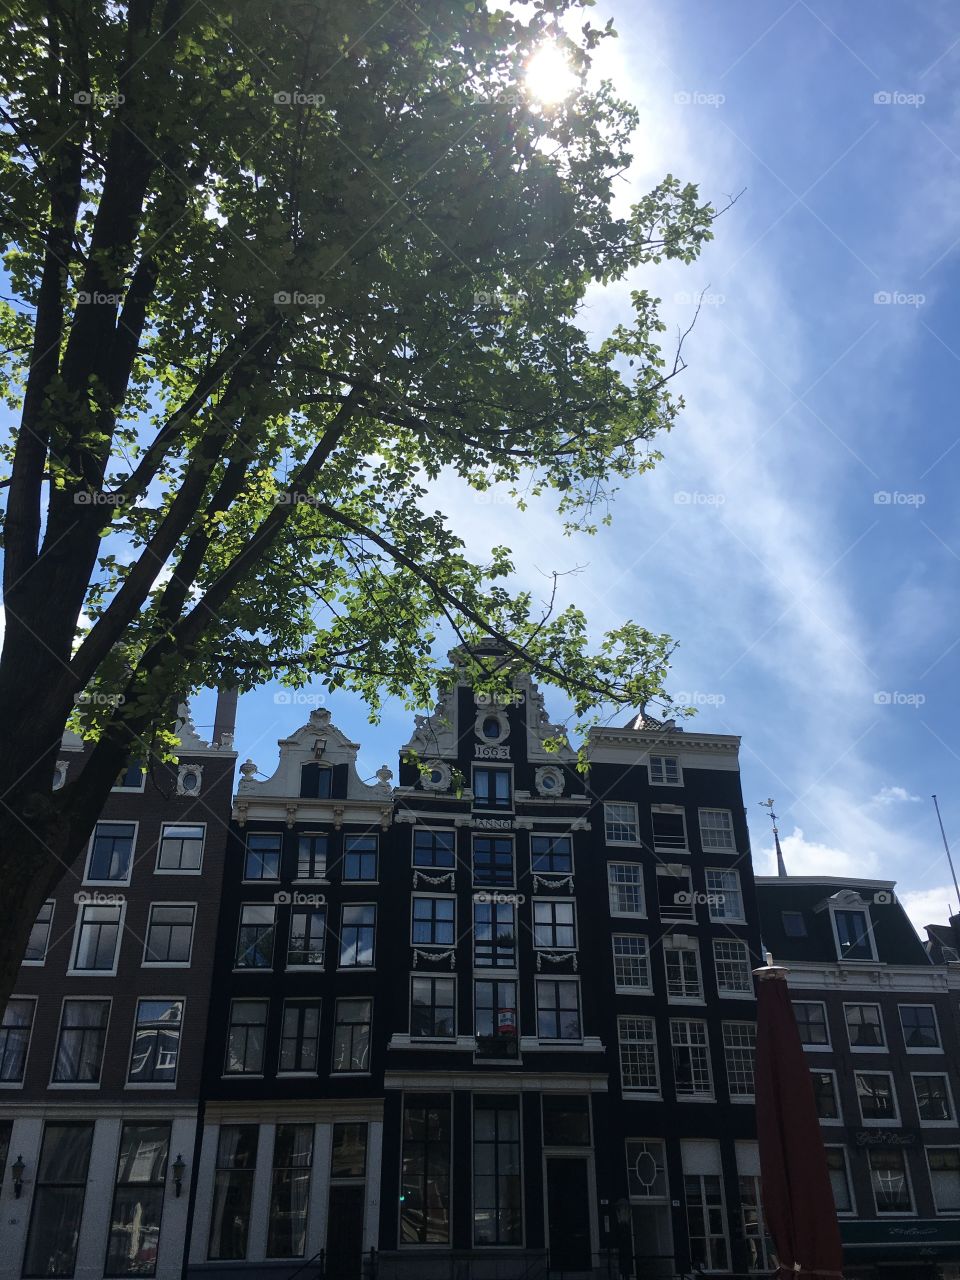 Amsterdam row 